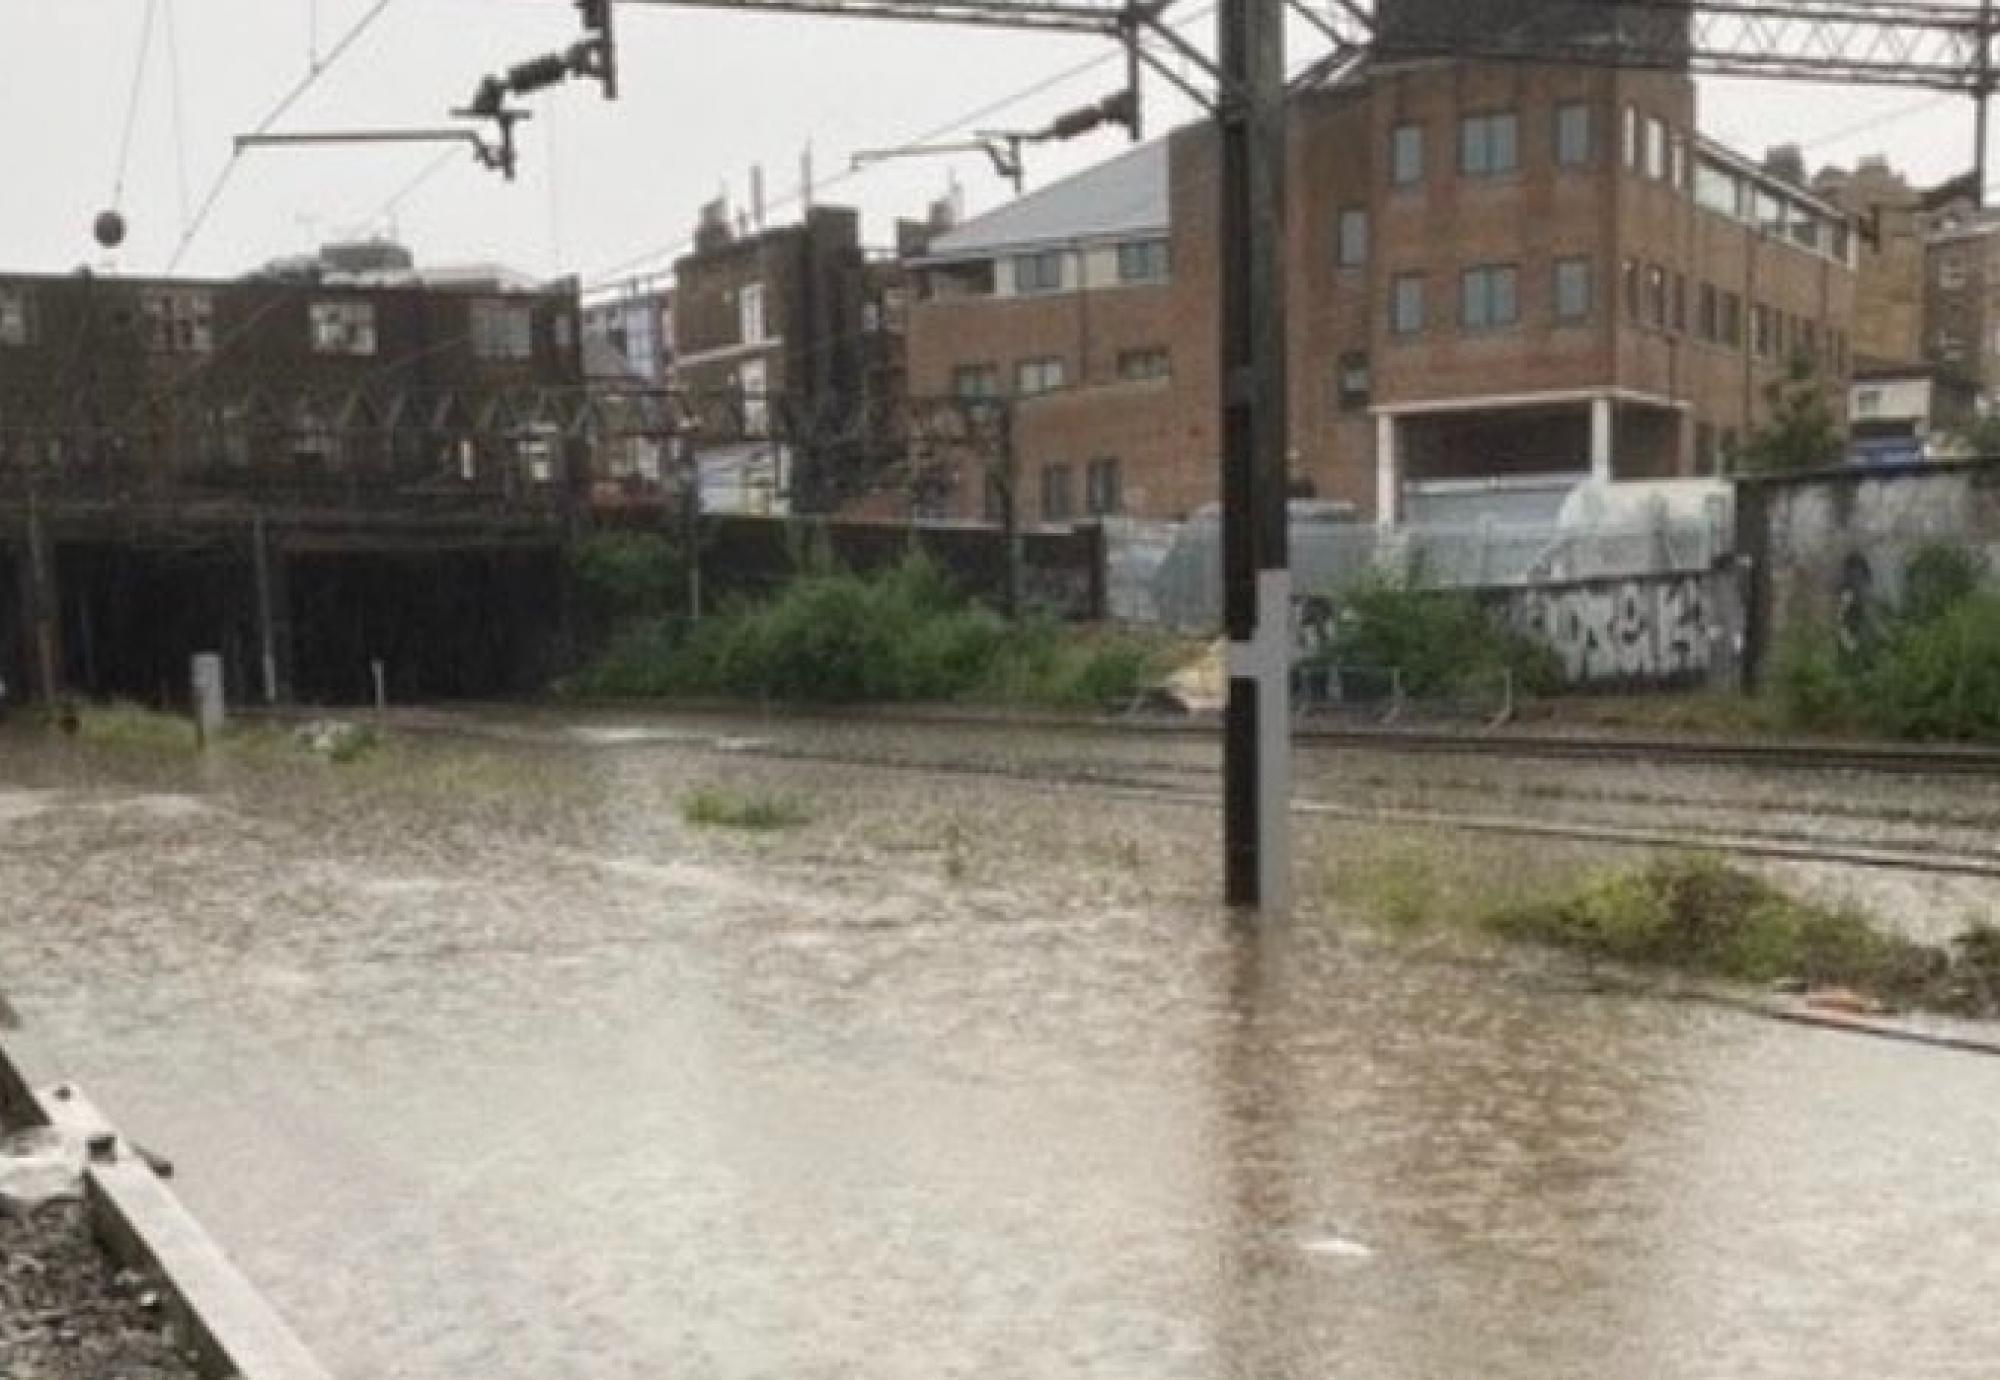 Flooding in London 